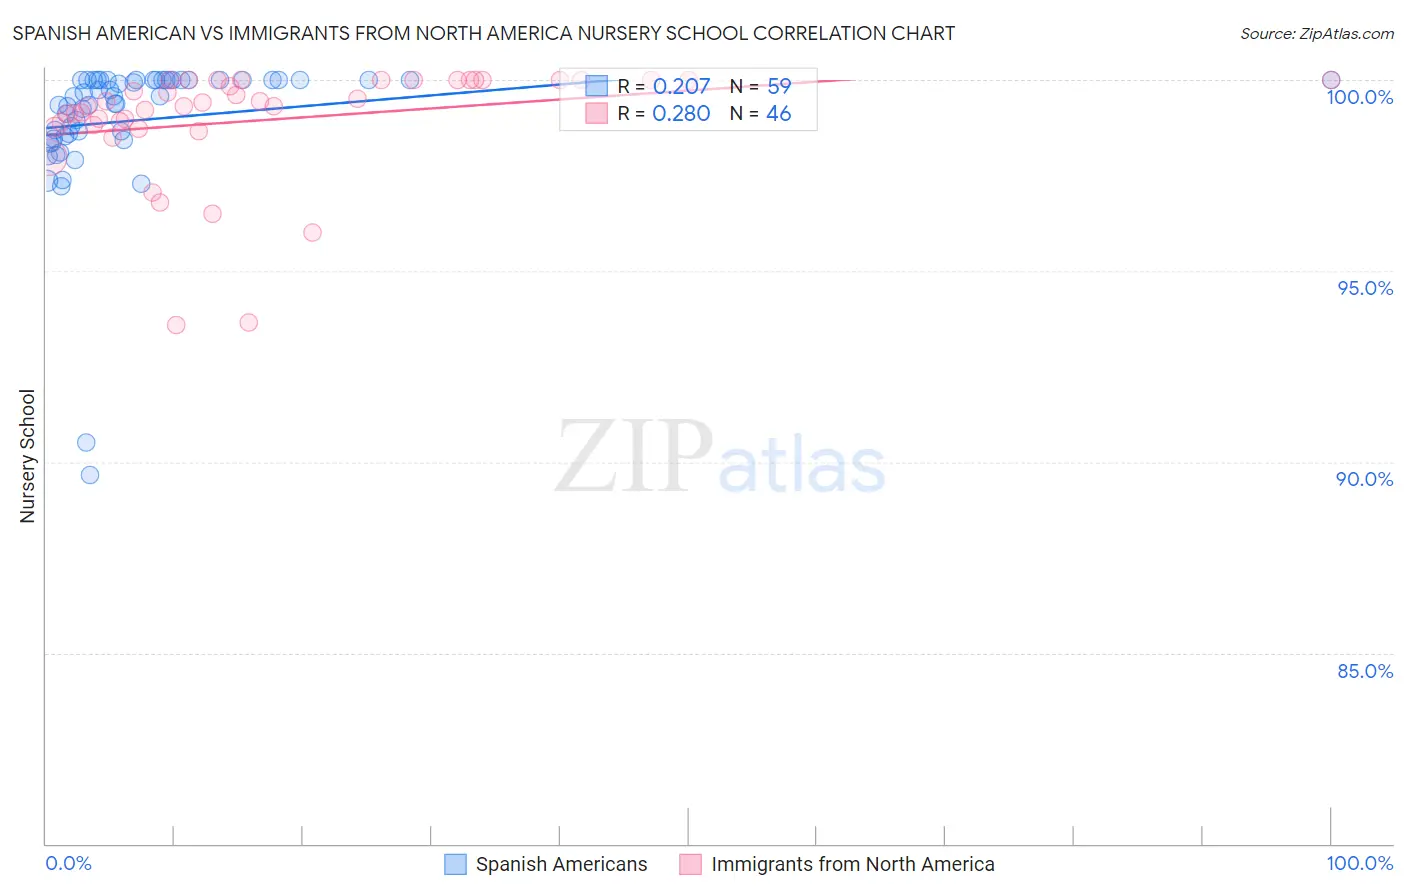 Spanish American vs Immigrants from North America Nursery School